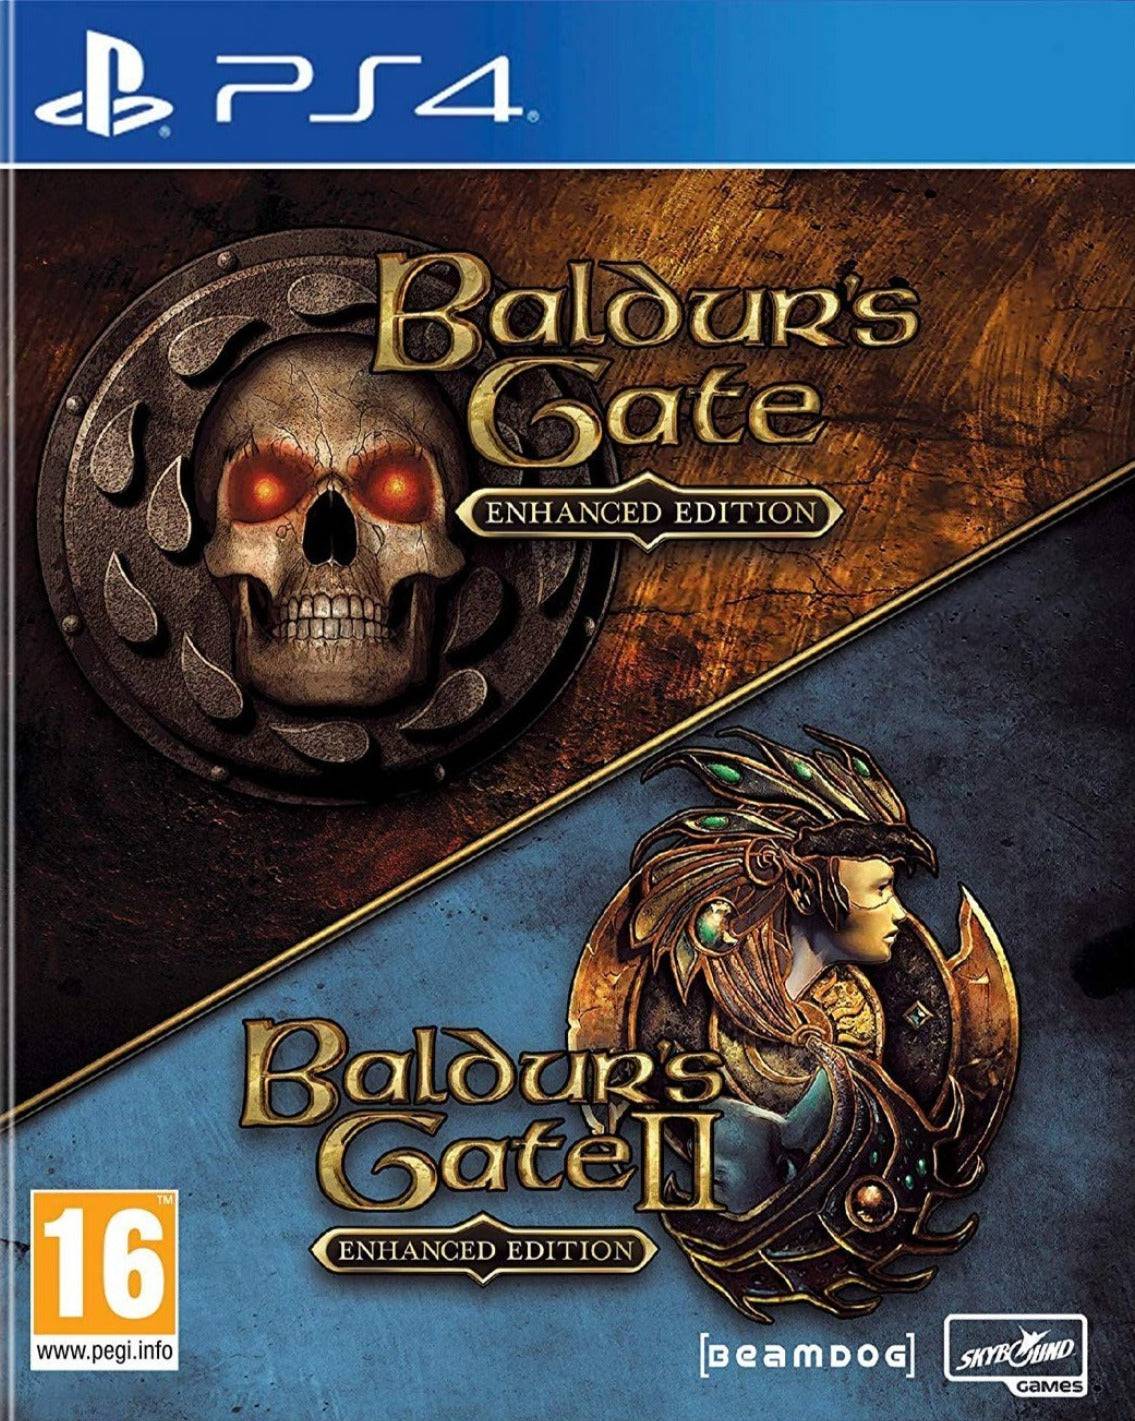 PS4 Baldurs Gate Enhanced & Baldurs Gate 2 (Beamdog Collection) - Albagame